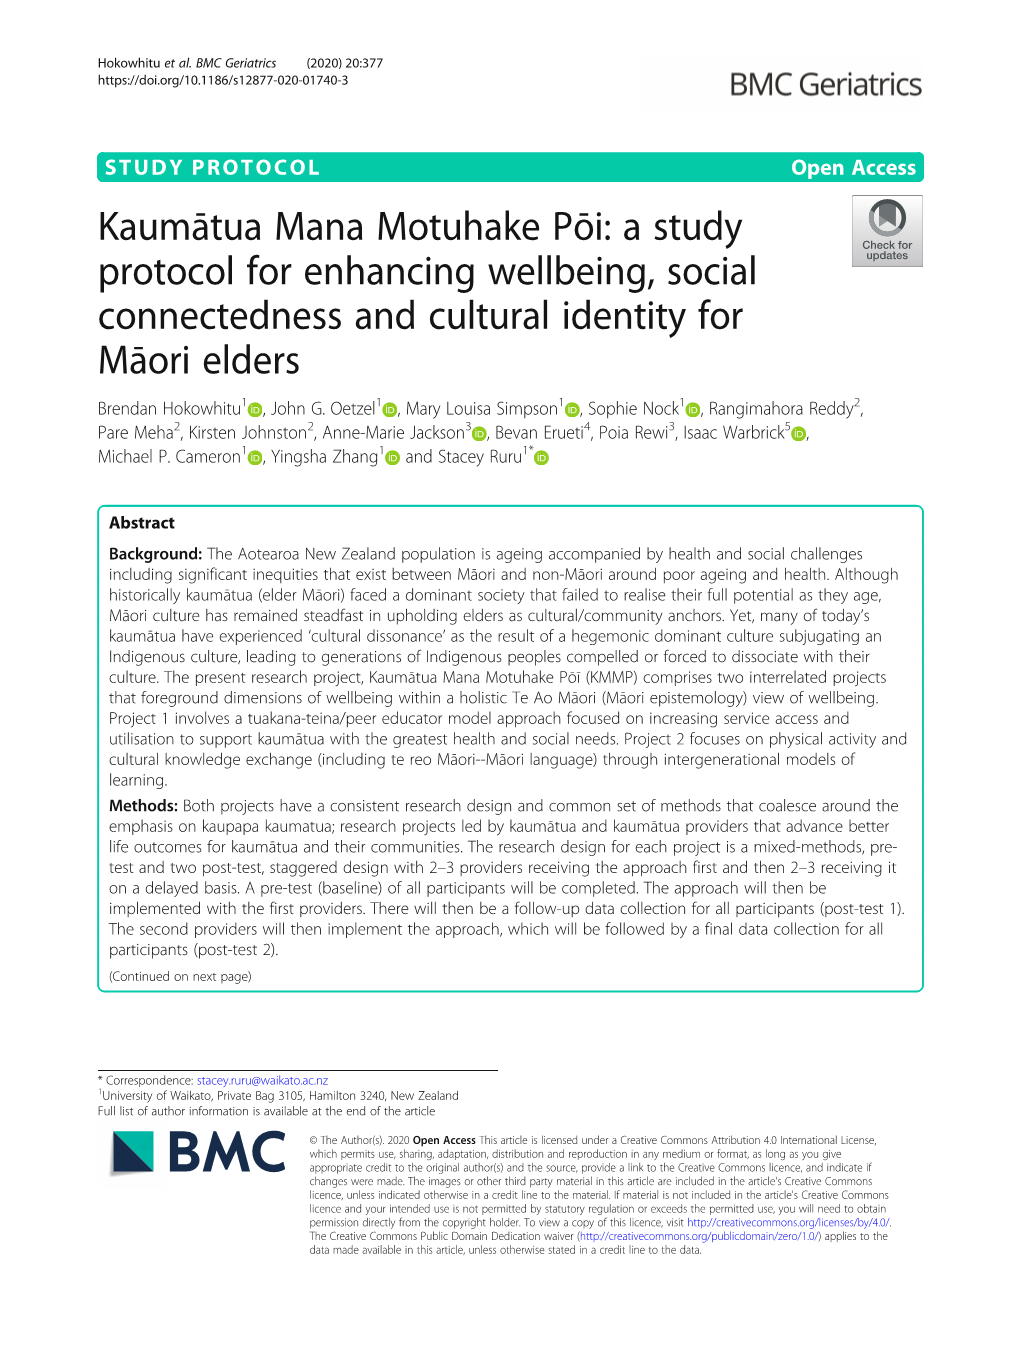 Kaumātua Mana Motuhake Pōi: a Study Protocol for Enhancing Wellbeing, Social Connectedness and Cultural Identity for Māori Elders Brendan Hokowhitu1 , John G